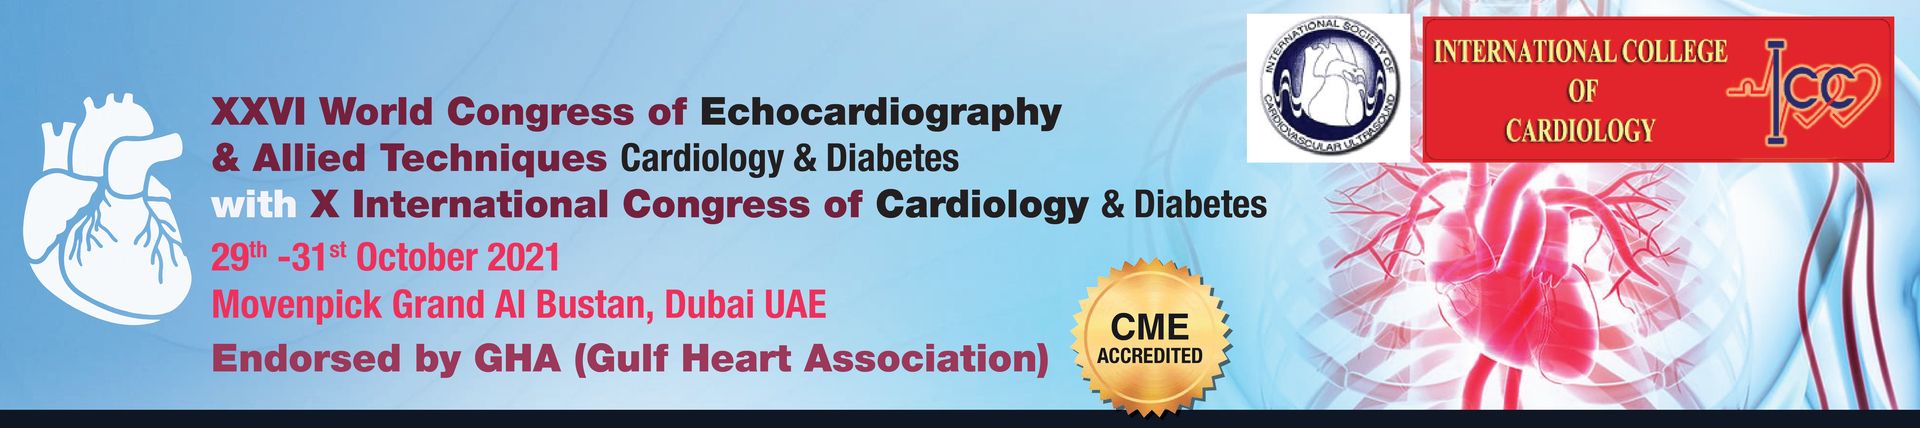 World Congress of Echocardiography & Allied Techniques Cardiology & Diabetes, Dubai, United Arab Emirates